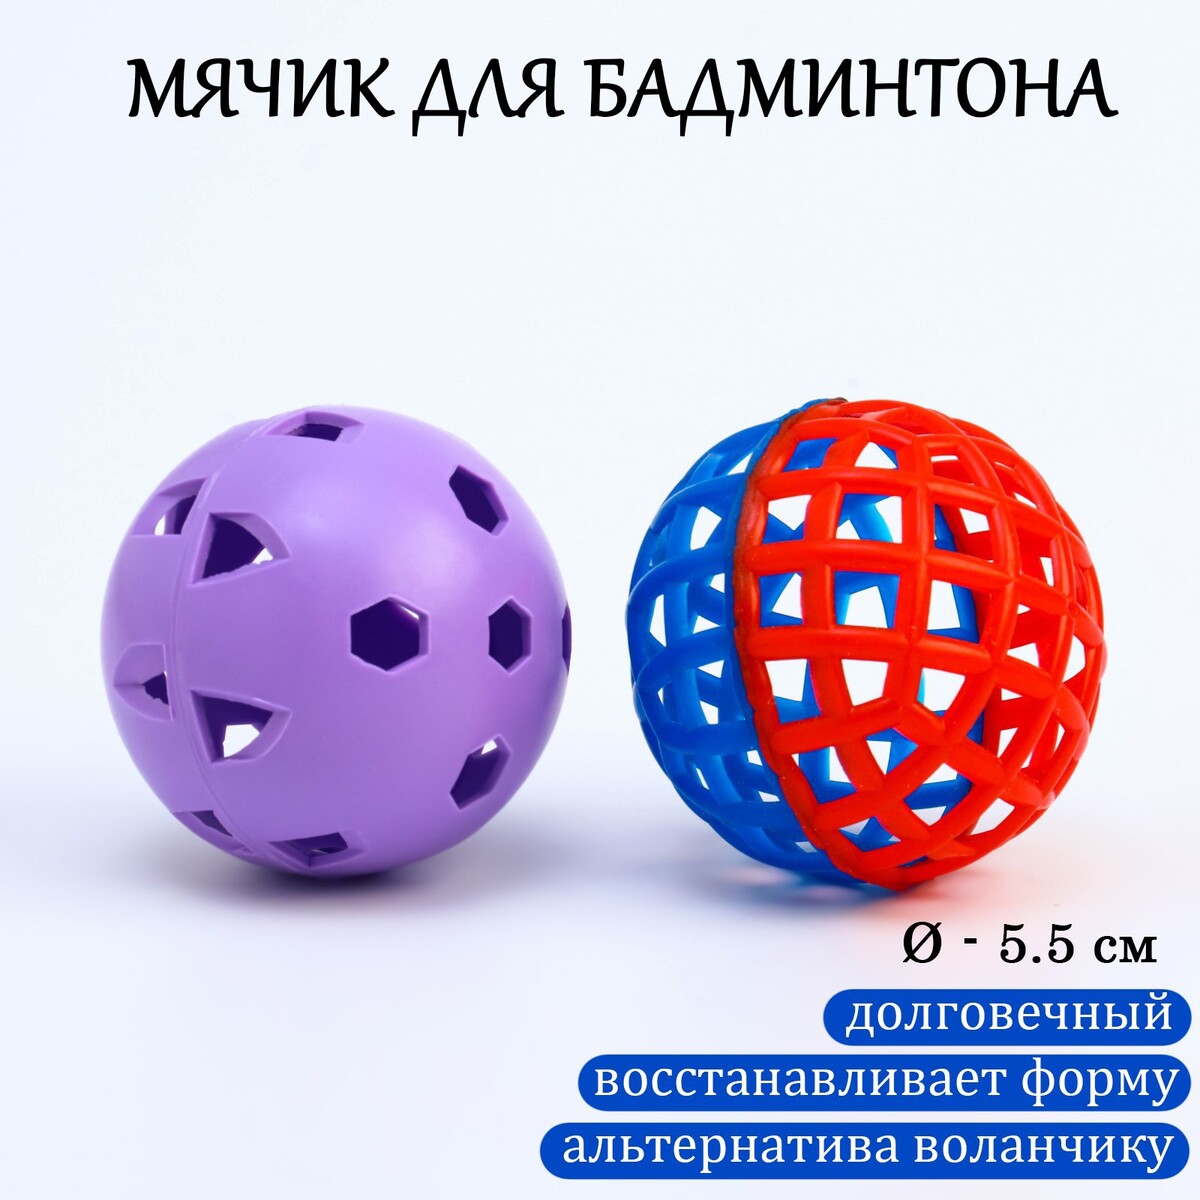 Мяч для бадминтона, d-5.5 см, 2 шт, стандартный + утяжеленный саттия турнир двух лун